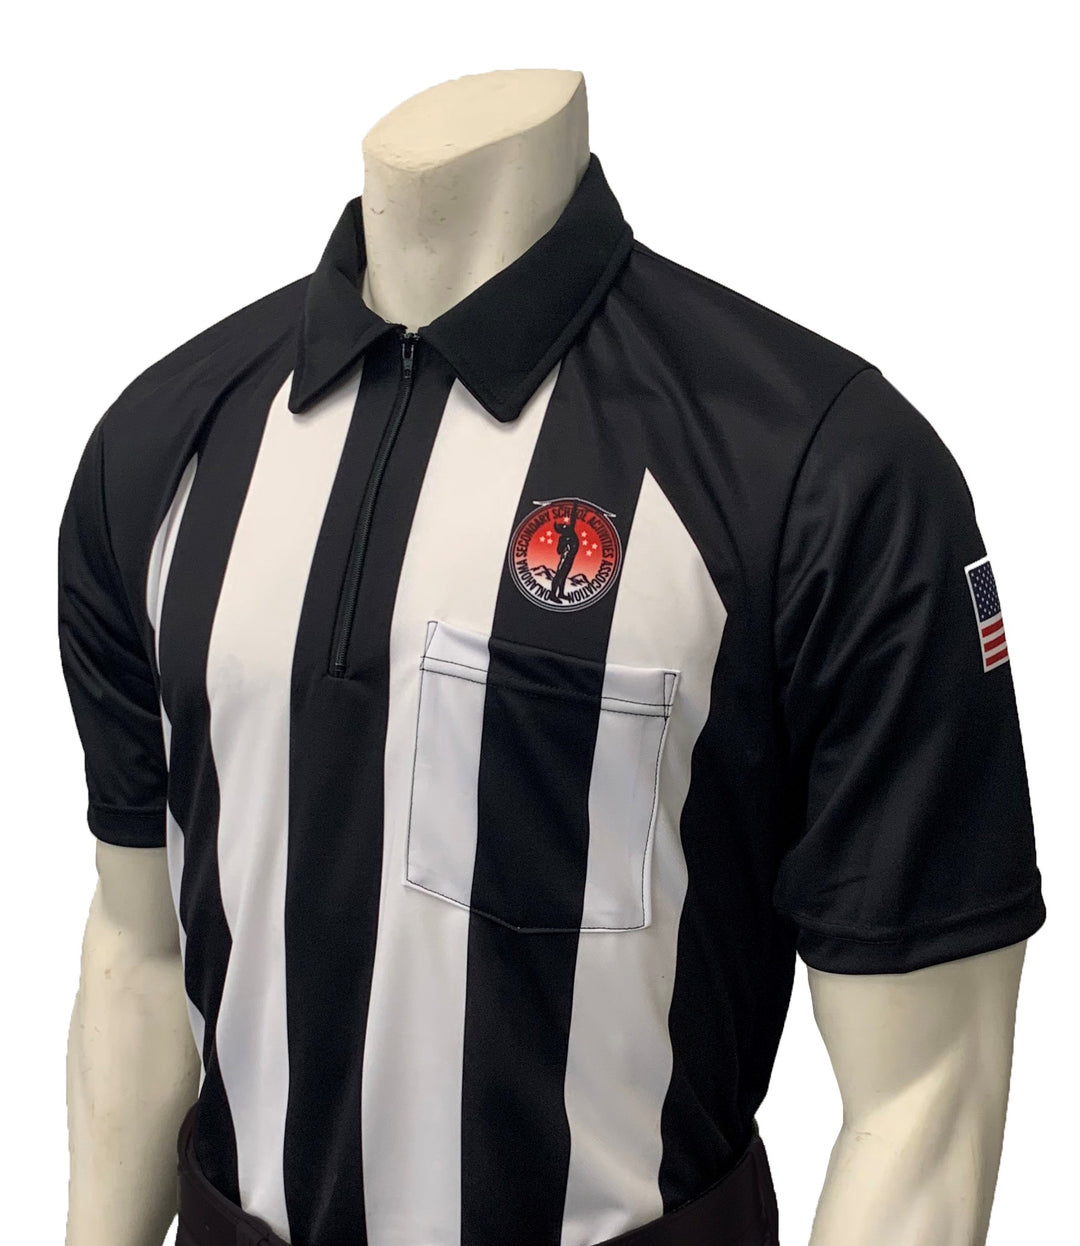 USA151OK - Smitty "Made in USA" - Dye Sub Oklahoma Football Short Sleeve Shirt